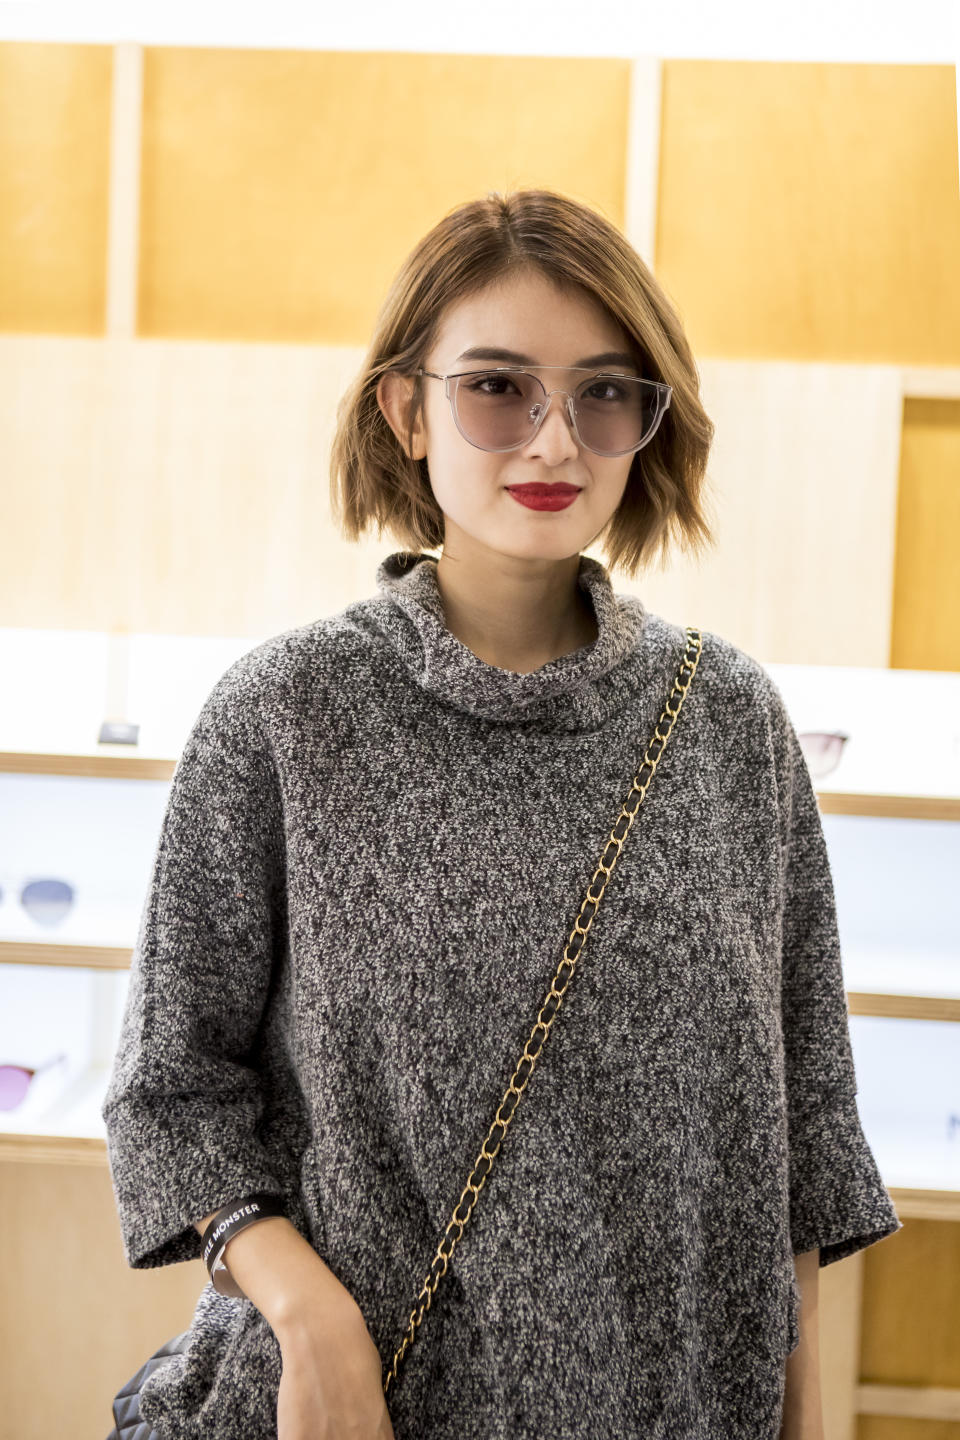 Singapore celebrities hop on new micro-frames eyewear trend